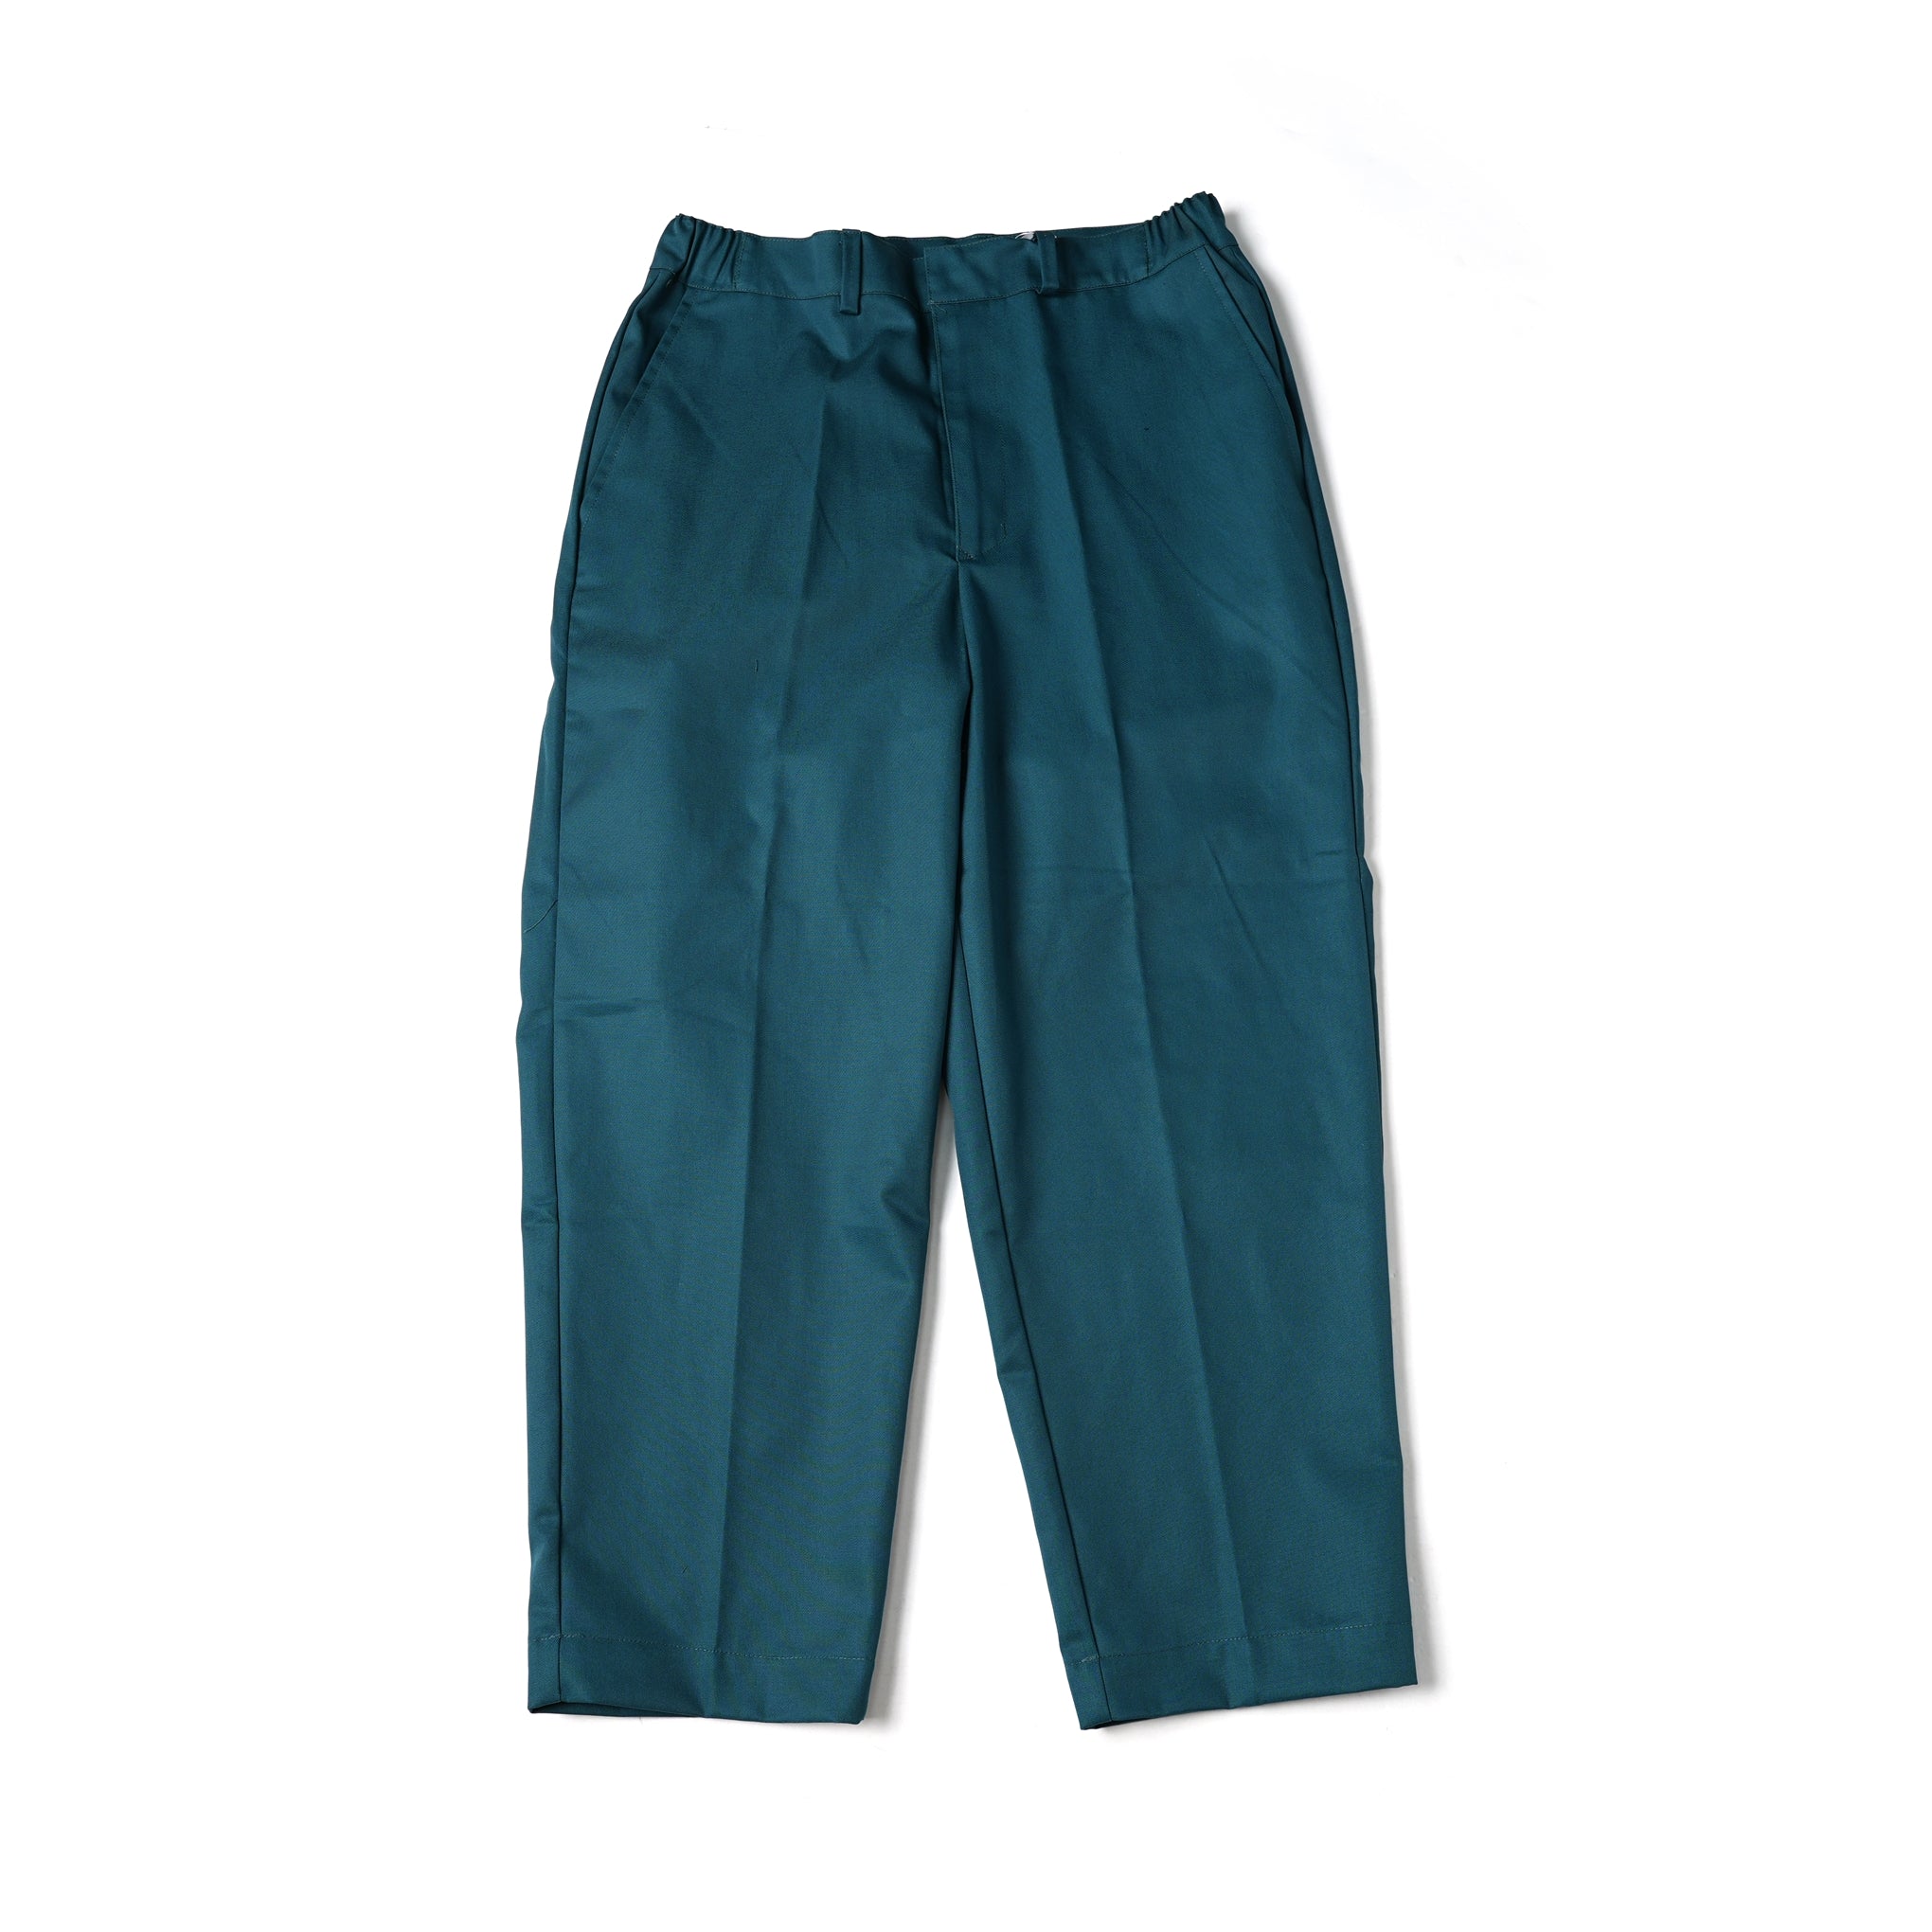 No:VE-23SS-V2 | Name:Pantalone Uficio | Color:Green/Burgundy/Black【VECCHI_ベッチ】